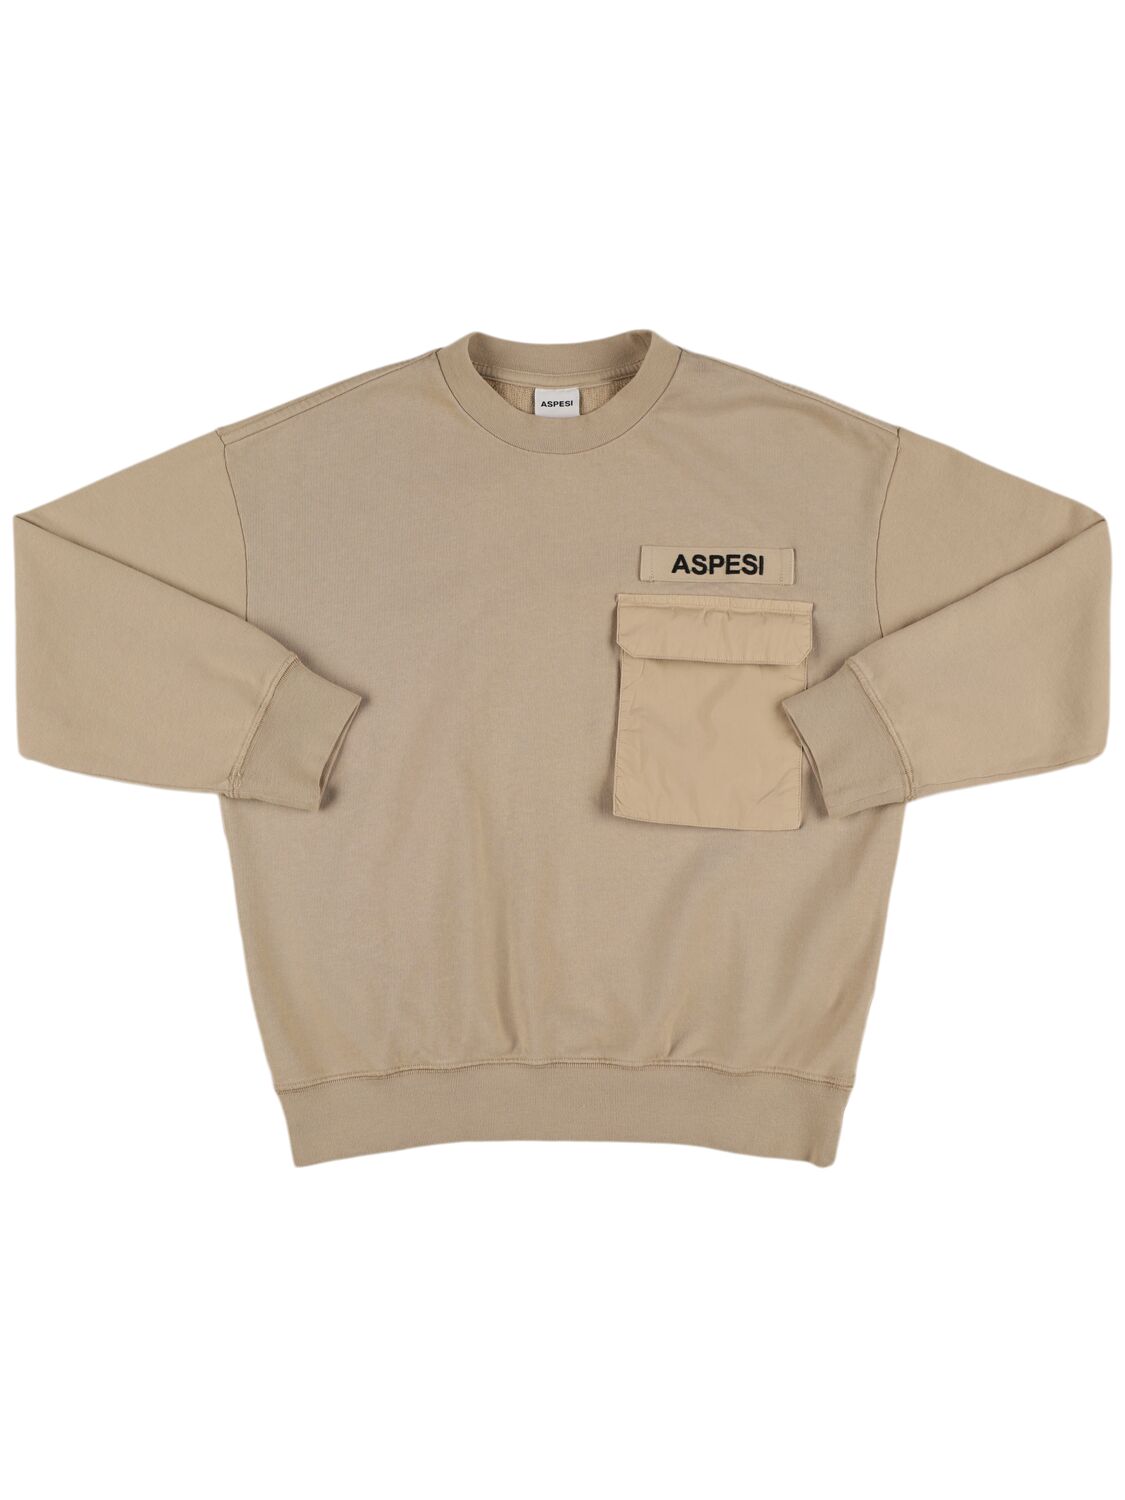 Aspesi Kids' Cotton Sweatshirt W/ Pocket In Brown